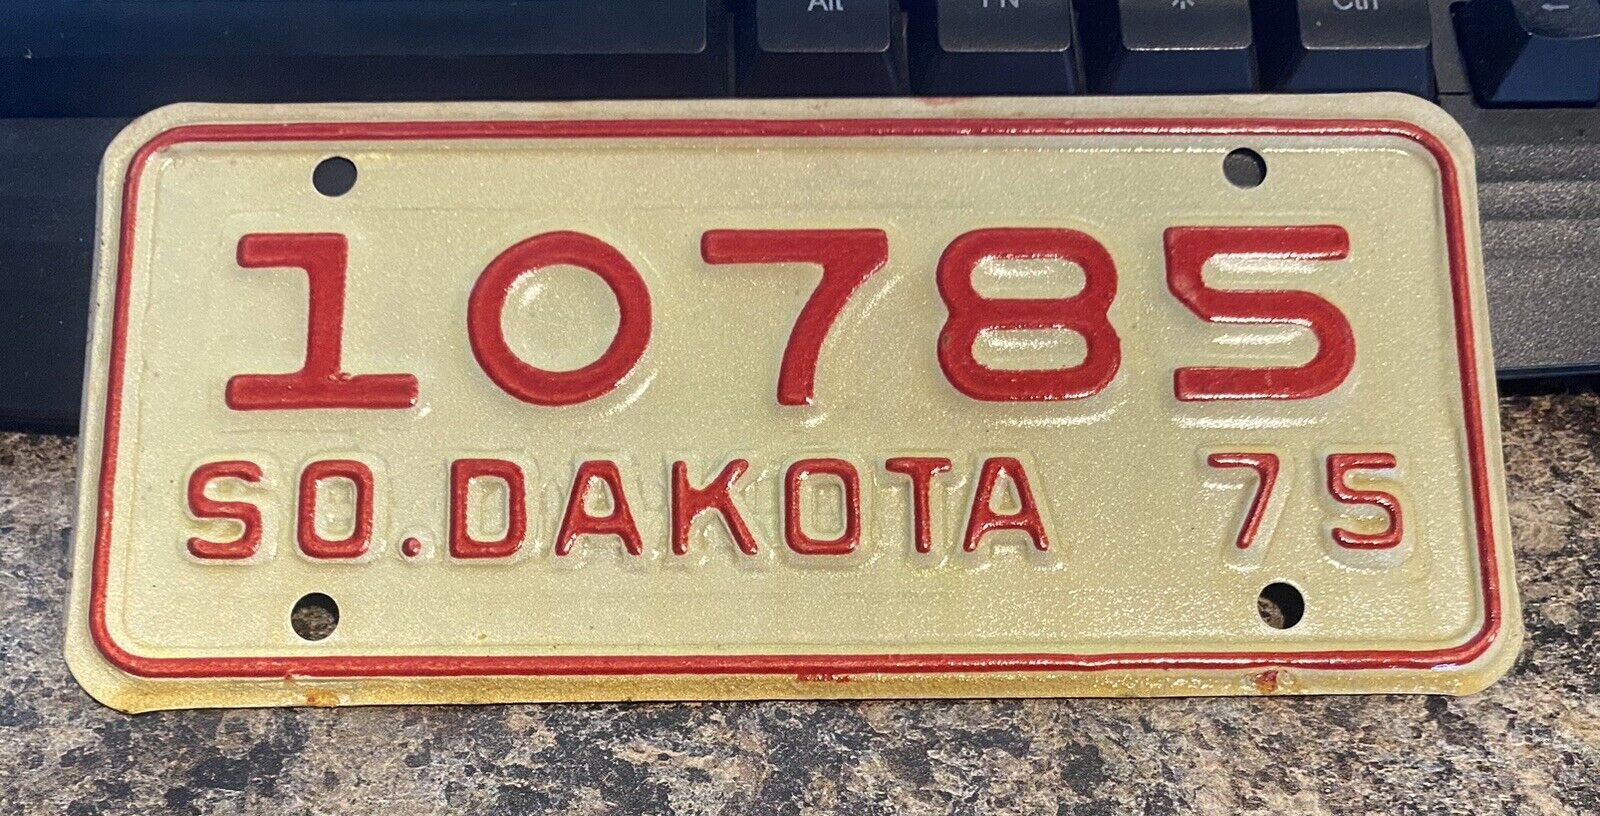 1975 South Dakota motorcycle license plate - Good Shape